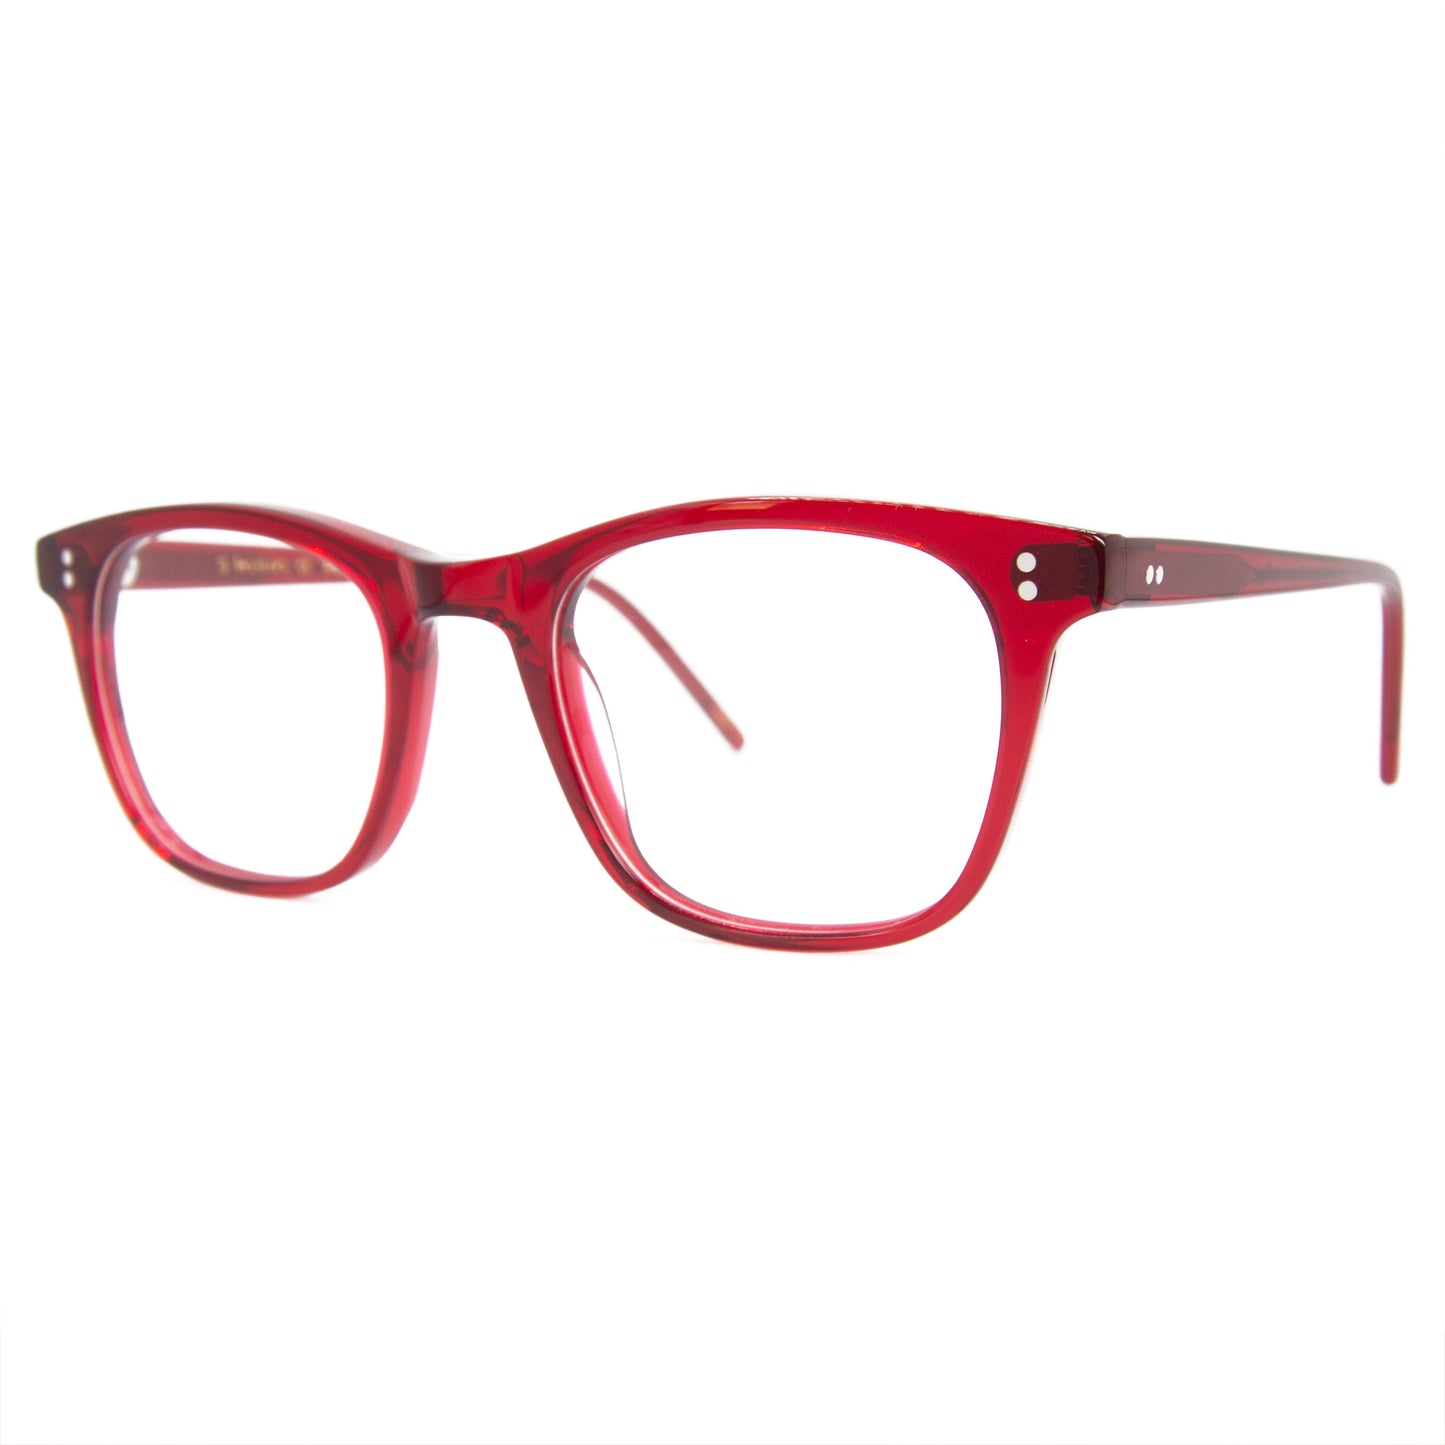 3 brothers - Yai Yai Alki - Red - Prescription Glasses - Side